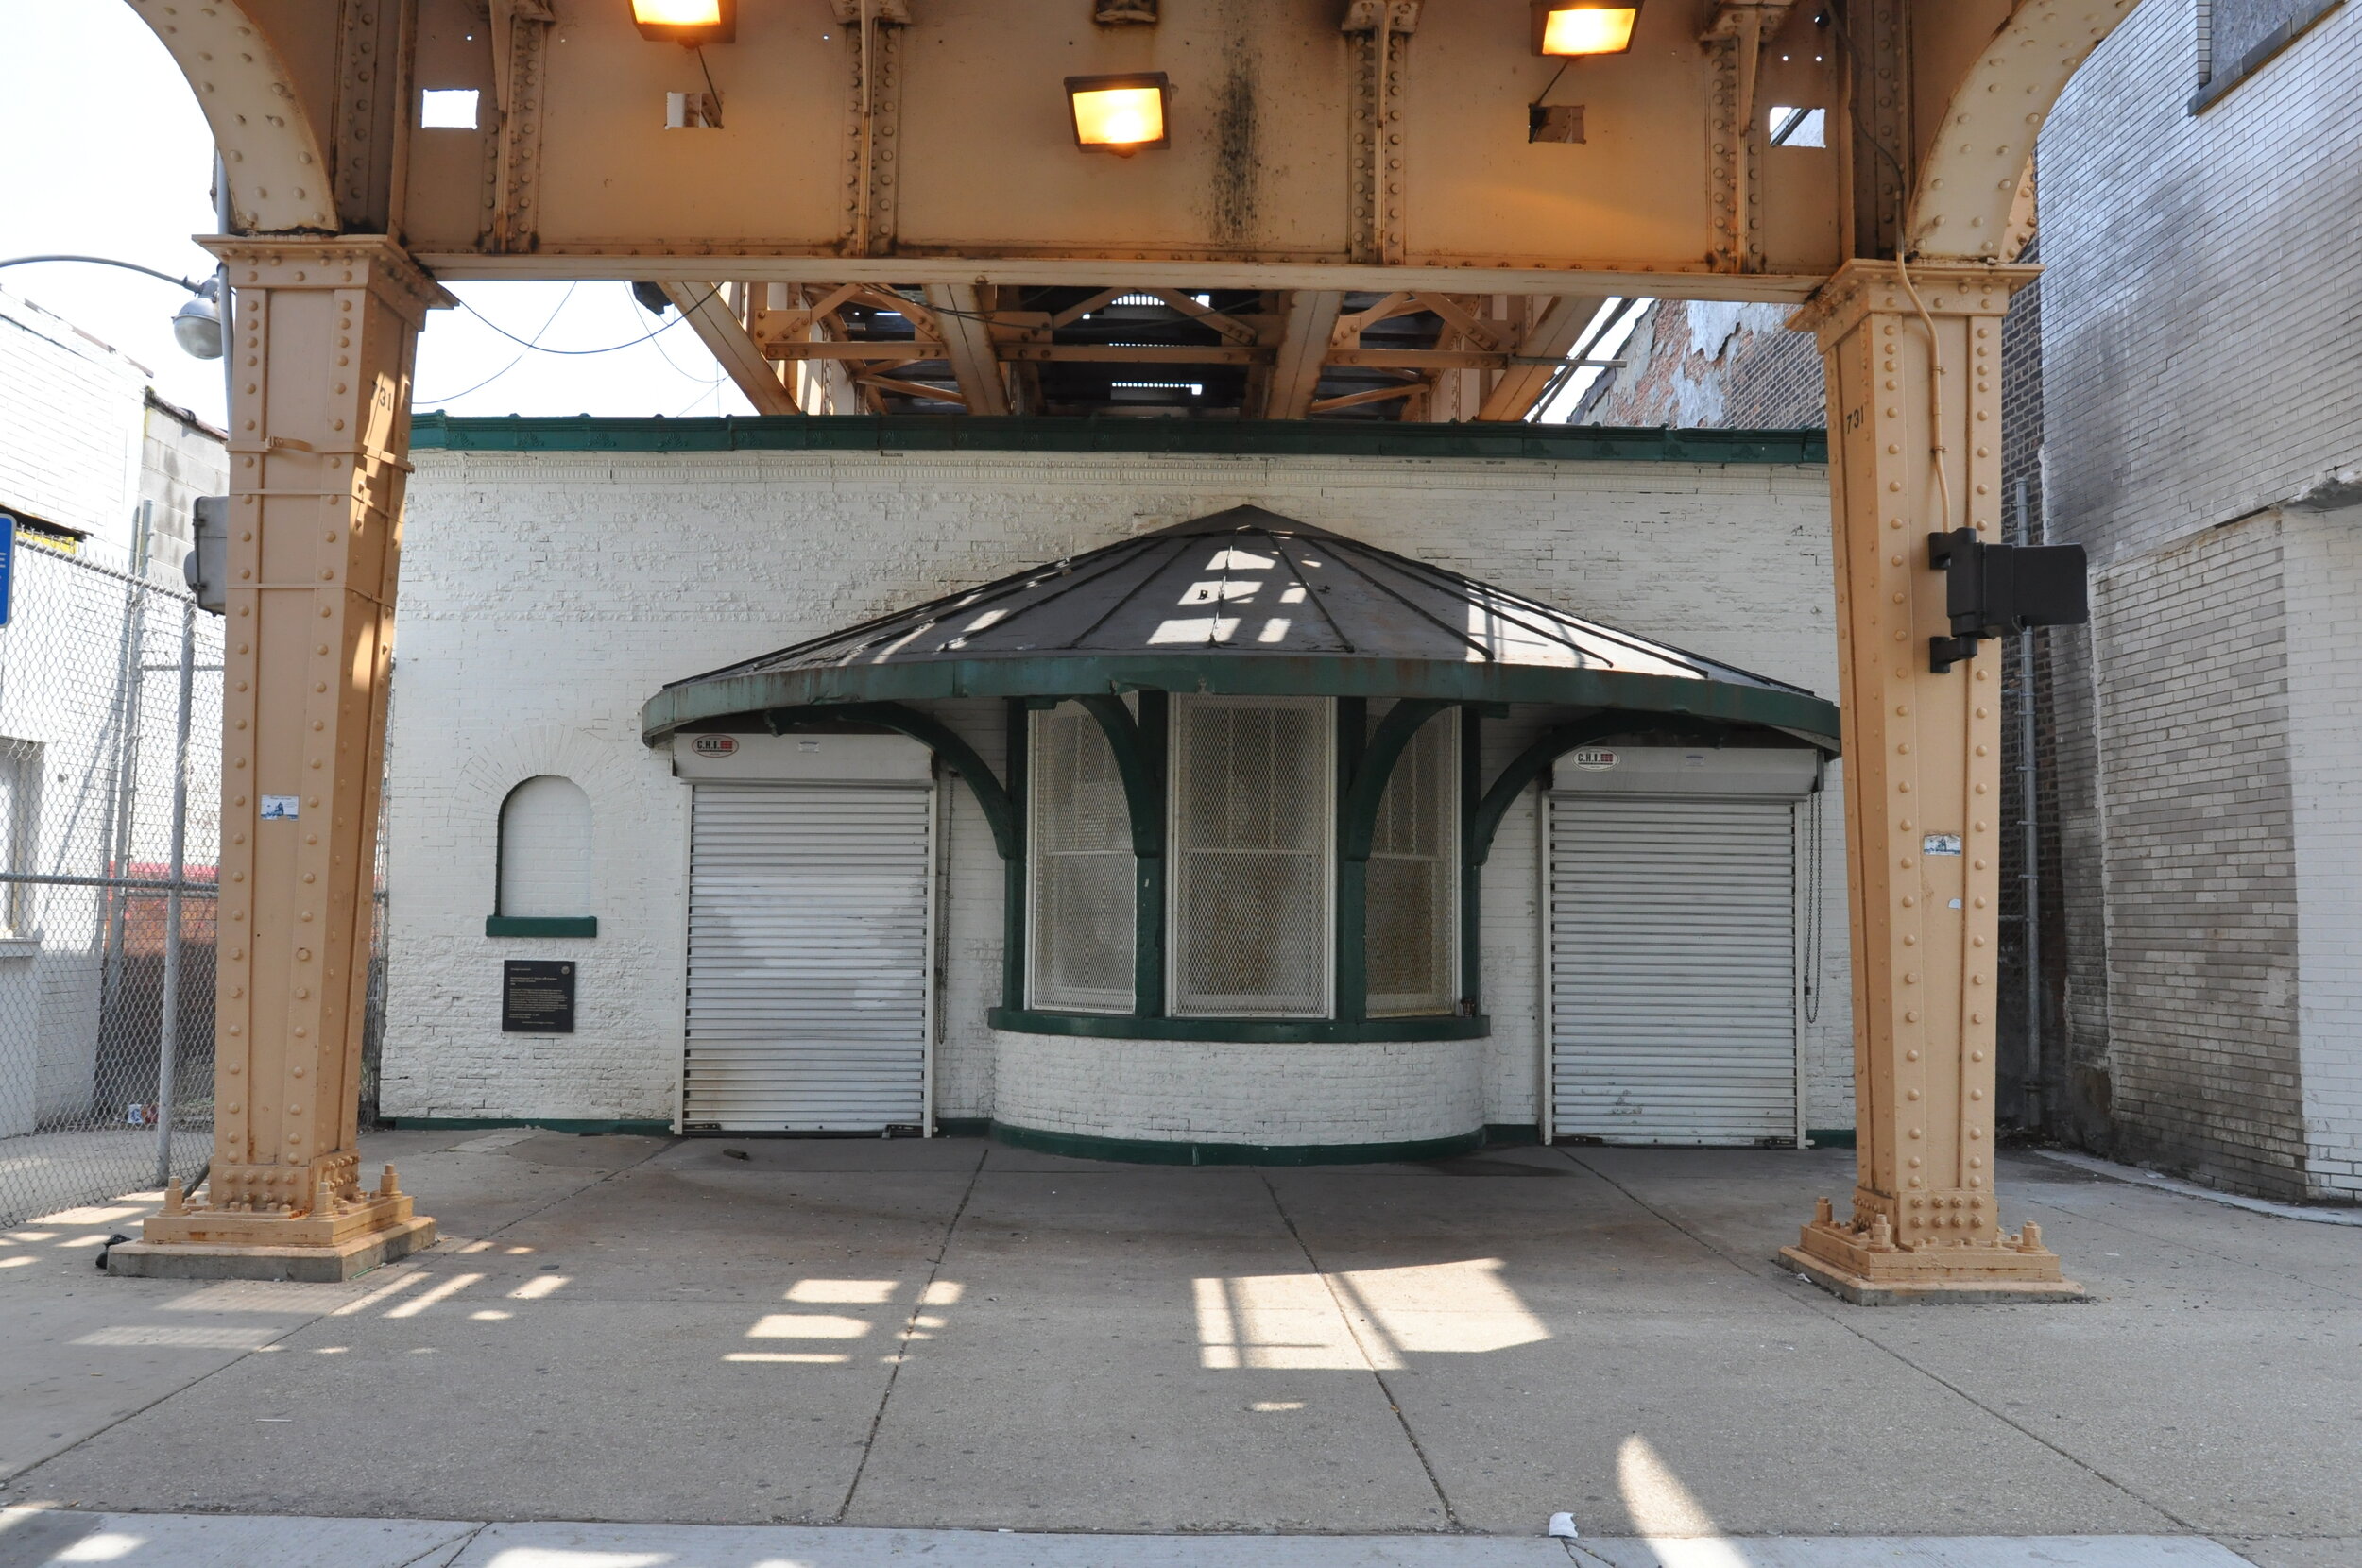 Historic CTA Garfield Station, pre-renovation